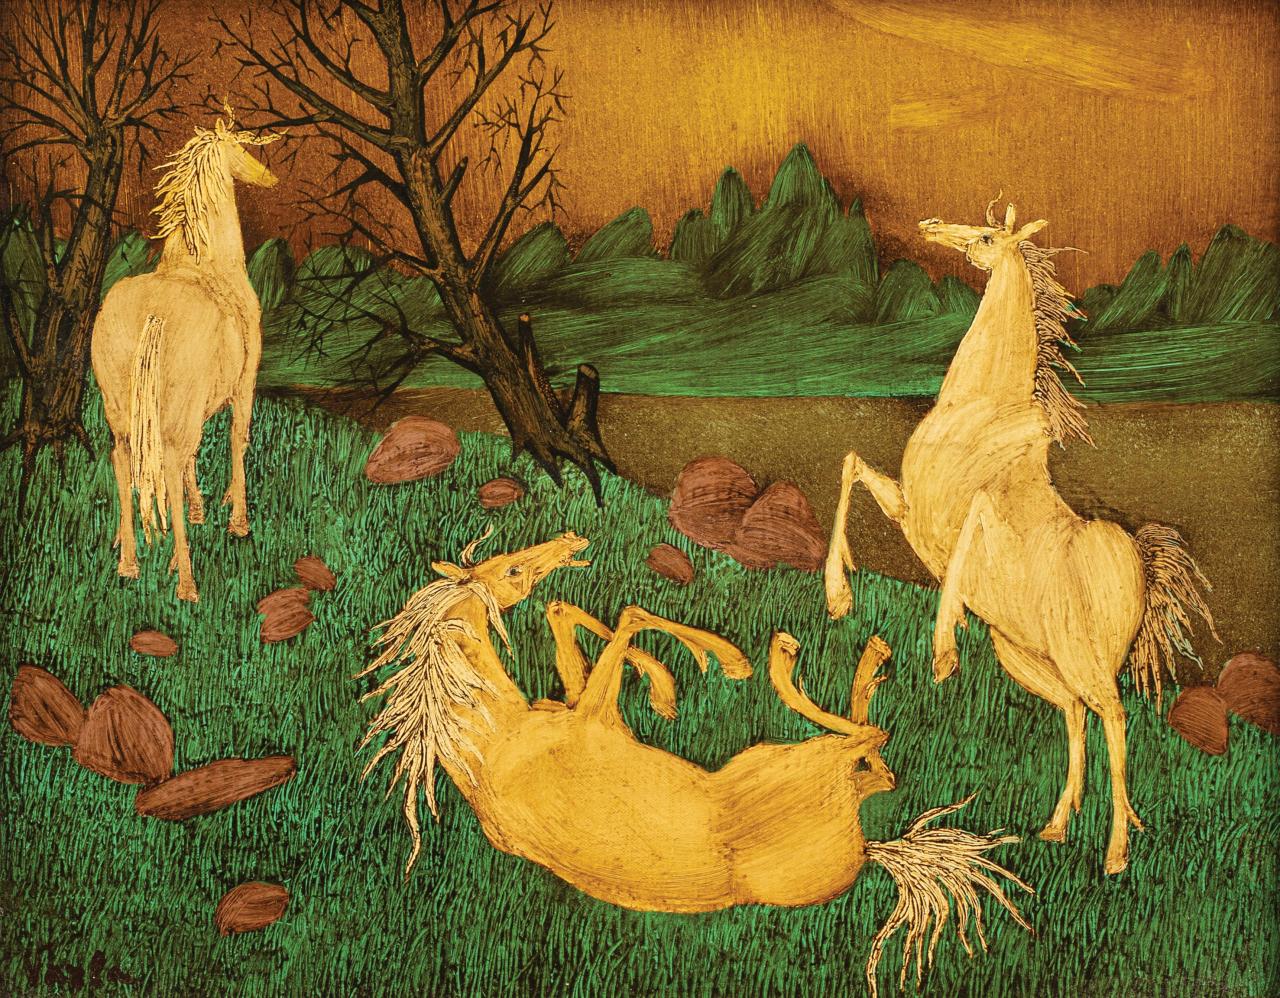 Les trois chevaux dans la prairie (The three horses in the meadow),  Félix Varla (1903 - 1986) 
- Oil on Canvas - 